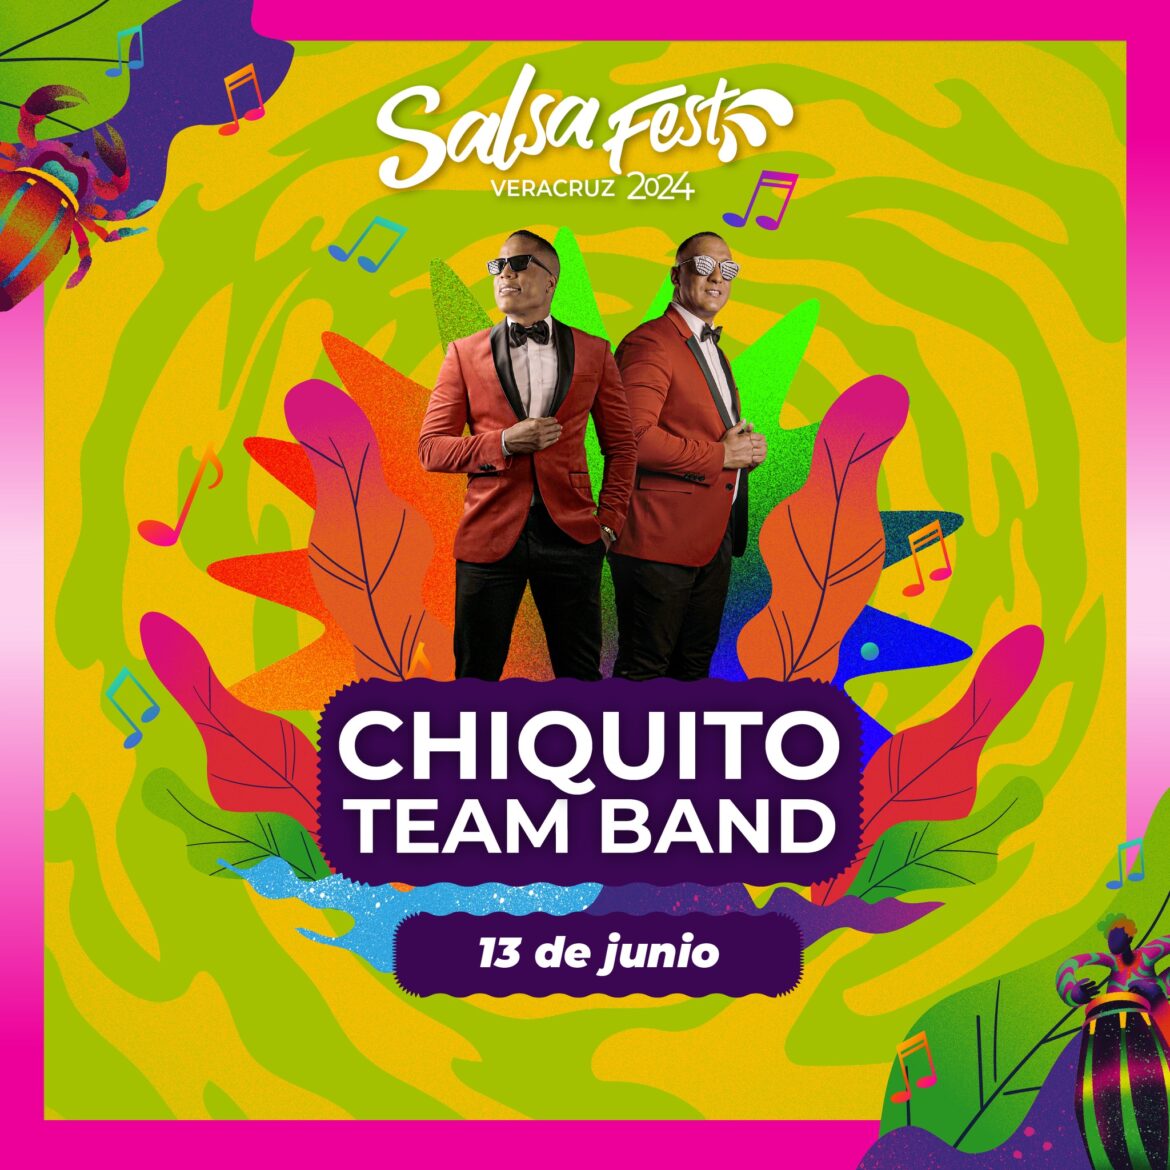 Chiquito Team Band se suma al Salsa Fest 2024